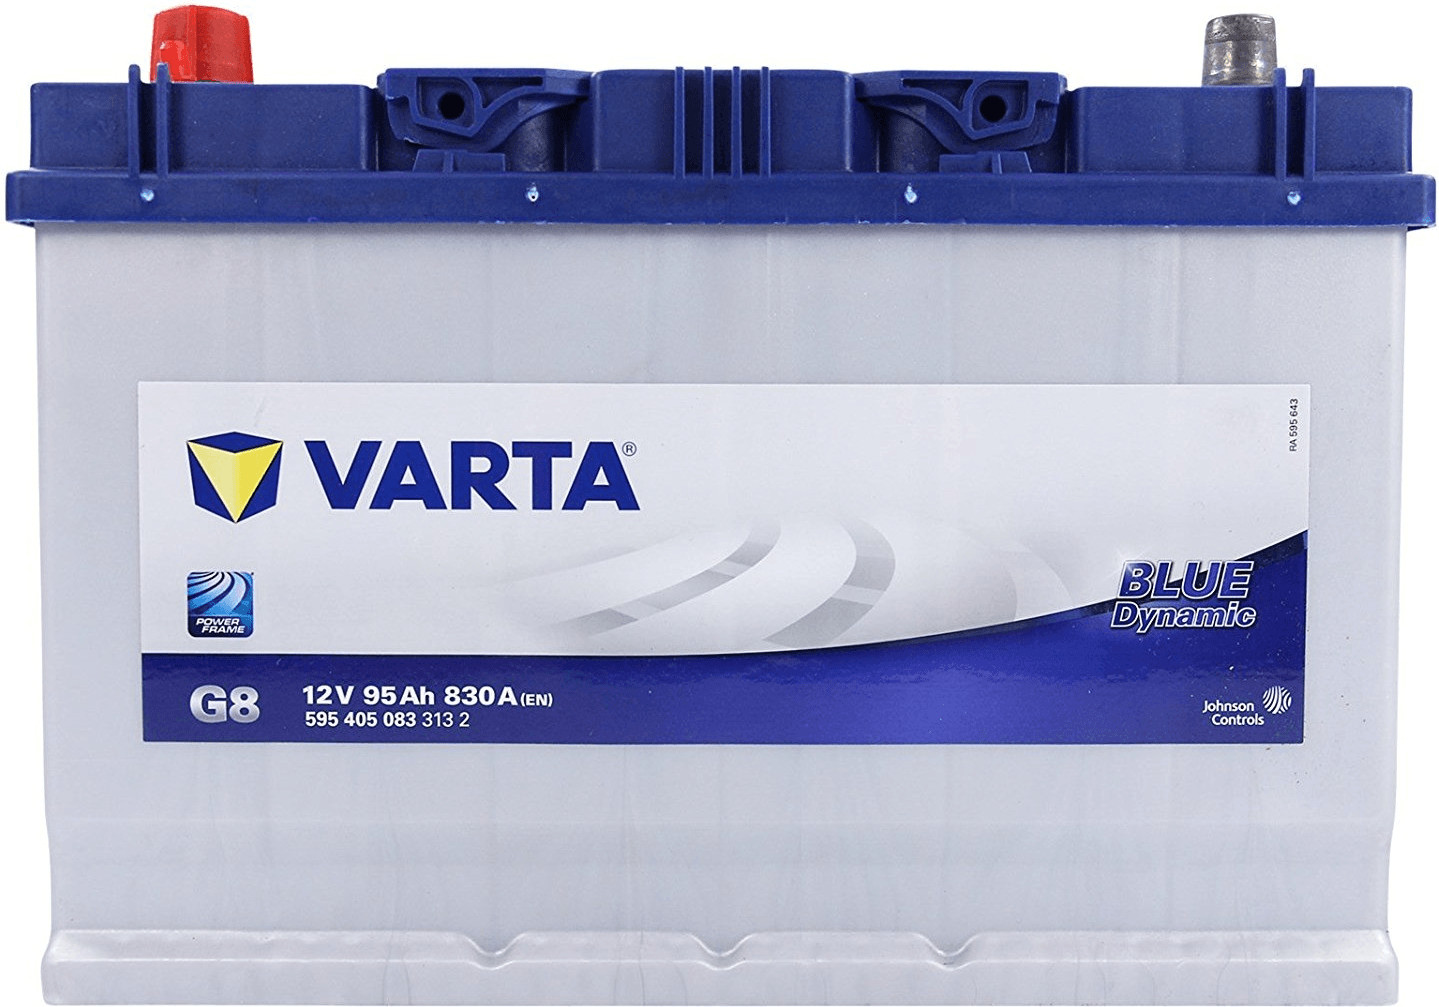 Varta Blue Dynamic G8 Battery. 95Ah - 830A(EN) 12V. Case D31  (306x173x225mm) - VT BATTERIES